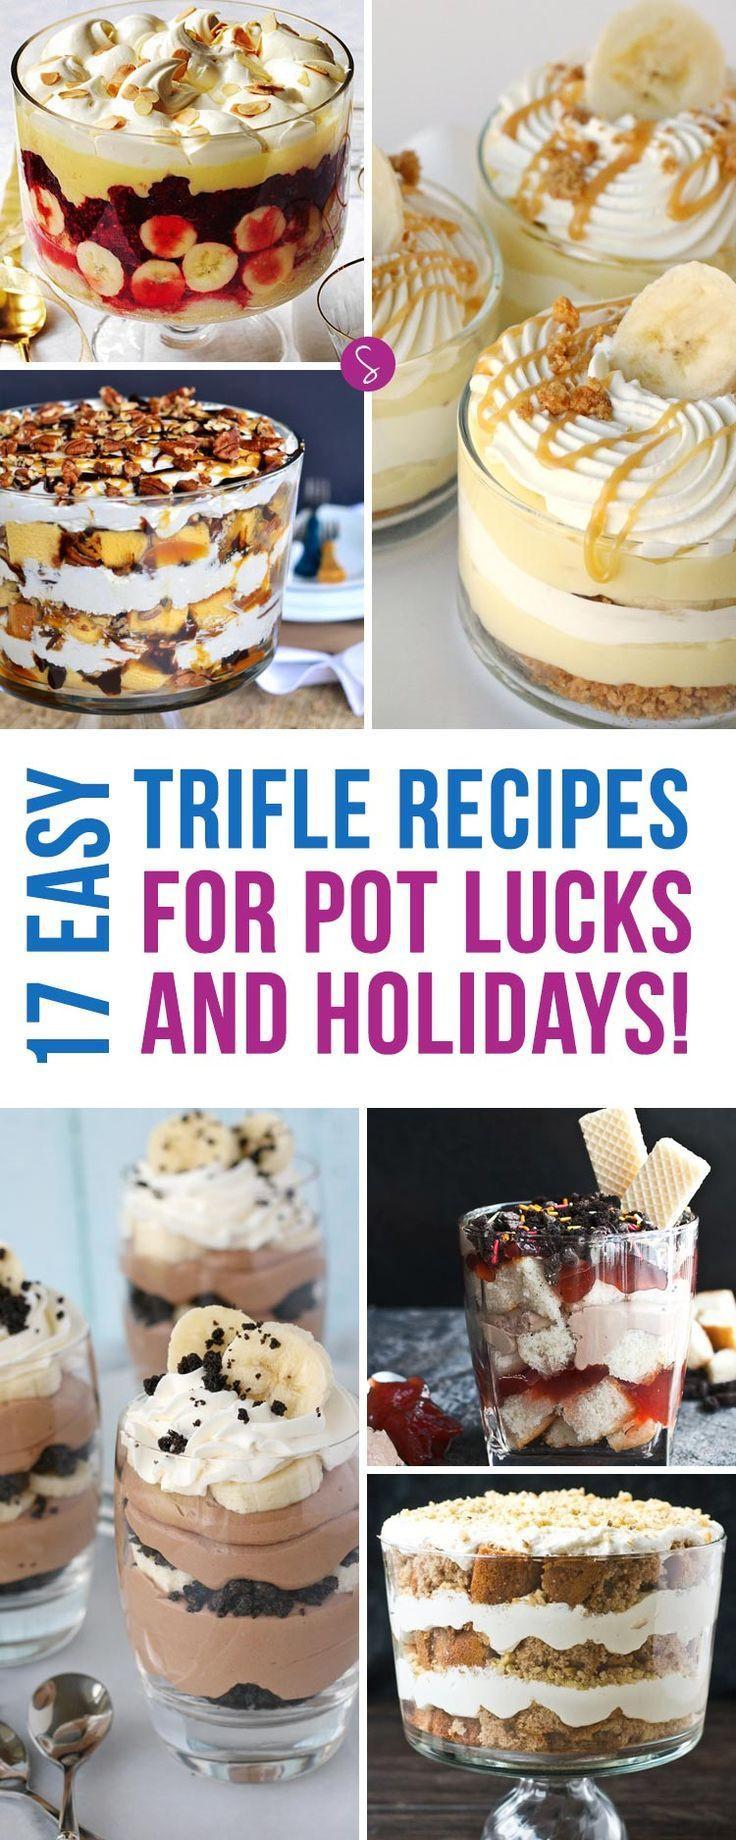 Potluck Dessert Ideas
 100 Church Potluck Recipes on Pinterest